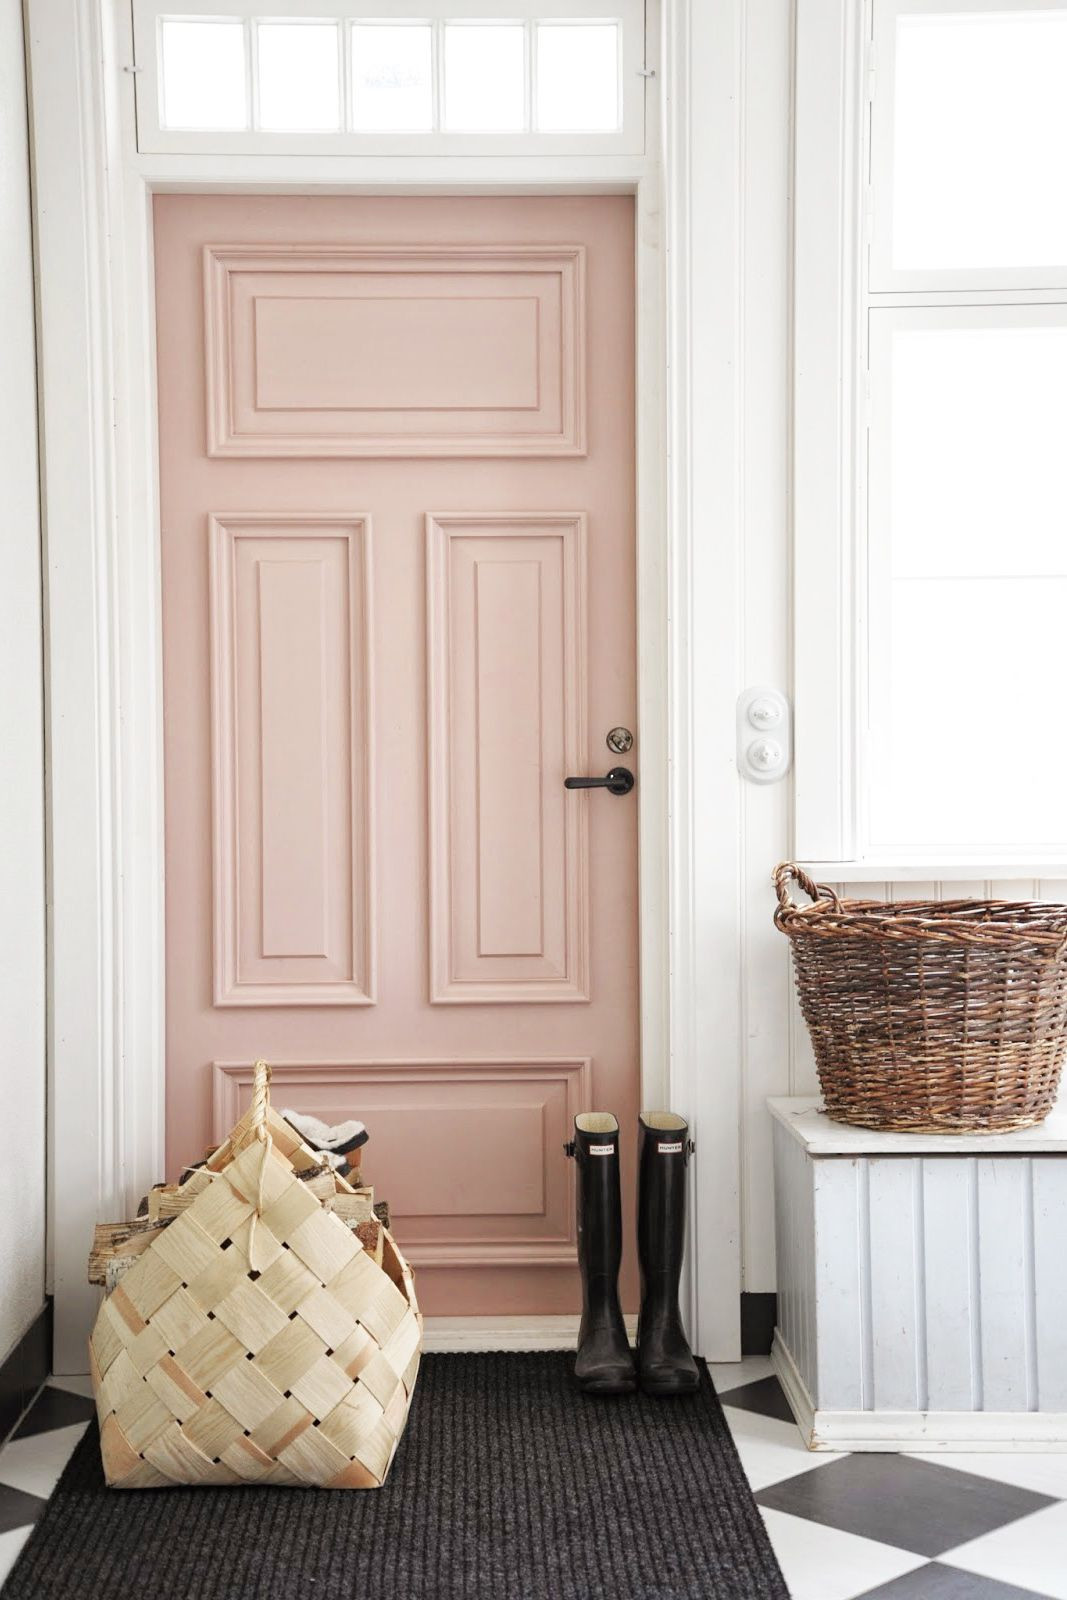 Different Color Hardwood Floors In Adjacent Rooms Of Rose Door Inside Home with Tiled Black and White Floors Knock In Rose Door Inside Home with Tiled Black and White Floors